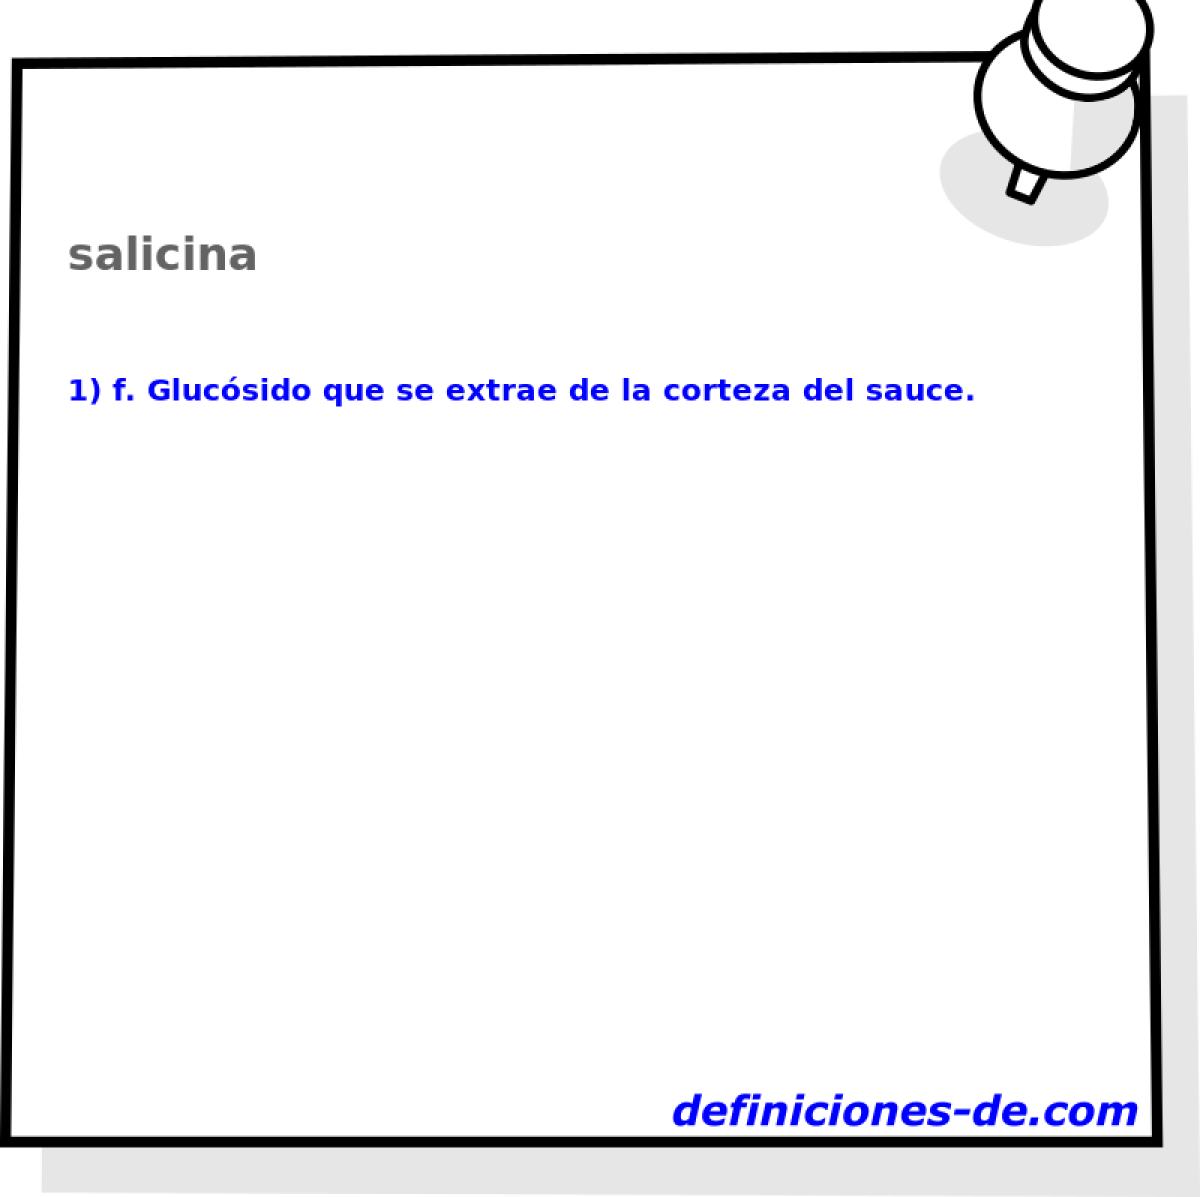 salicina 